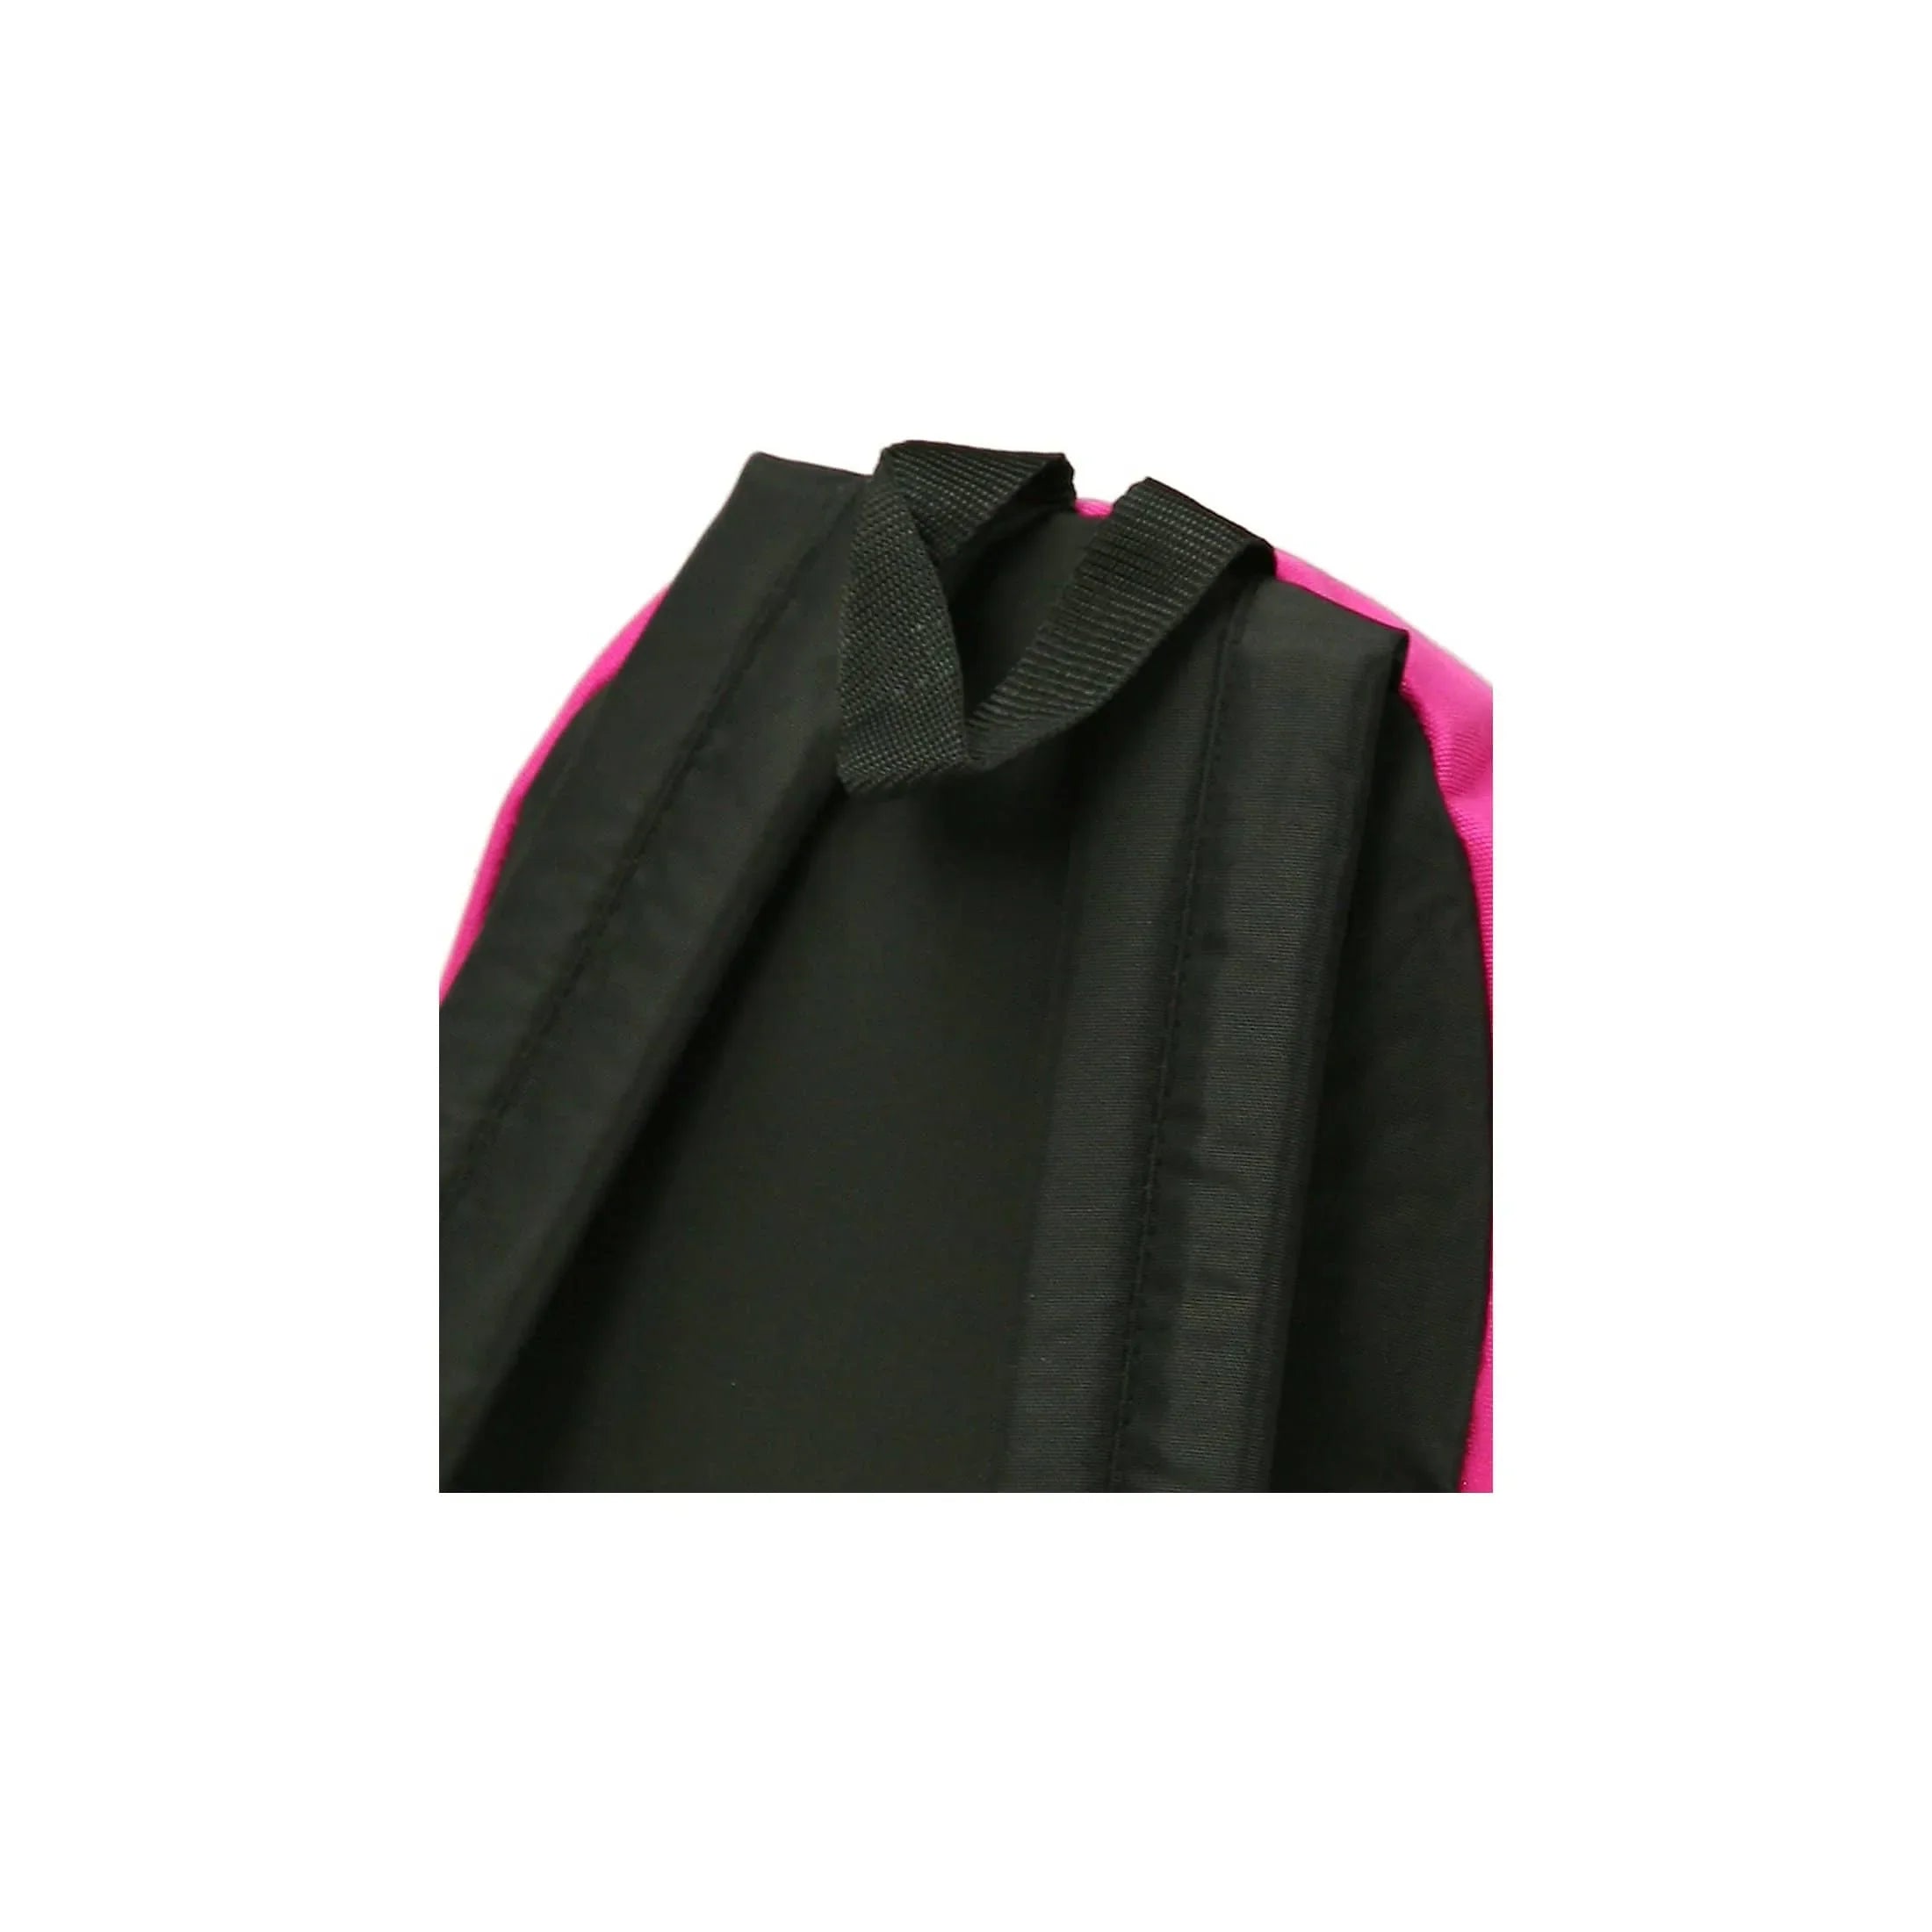 Eastpak Authentic Orbit leisure backpack 33 cm - black denim